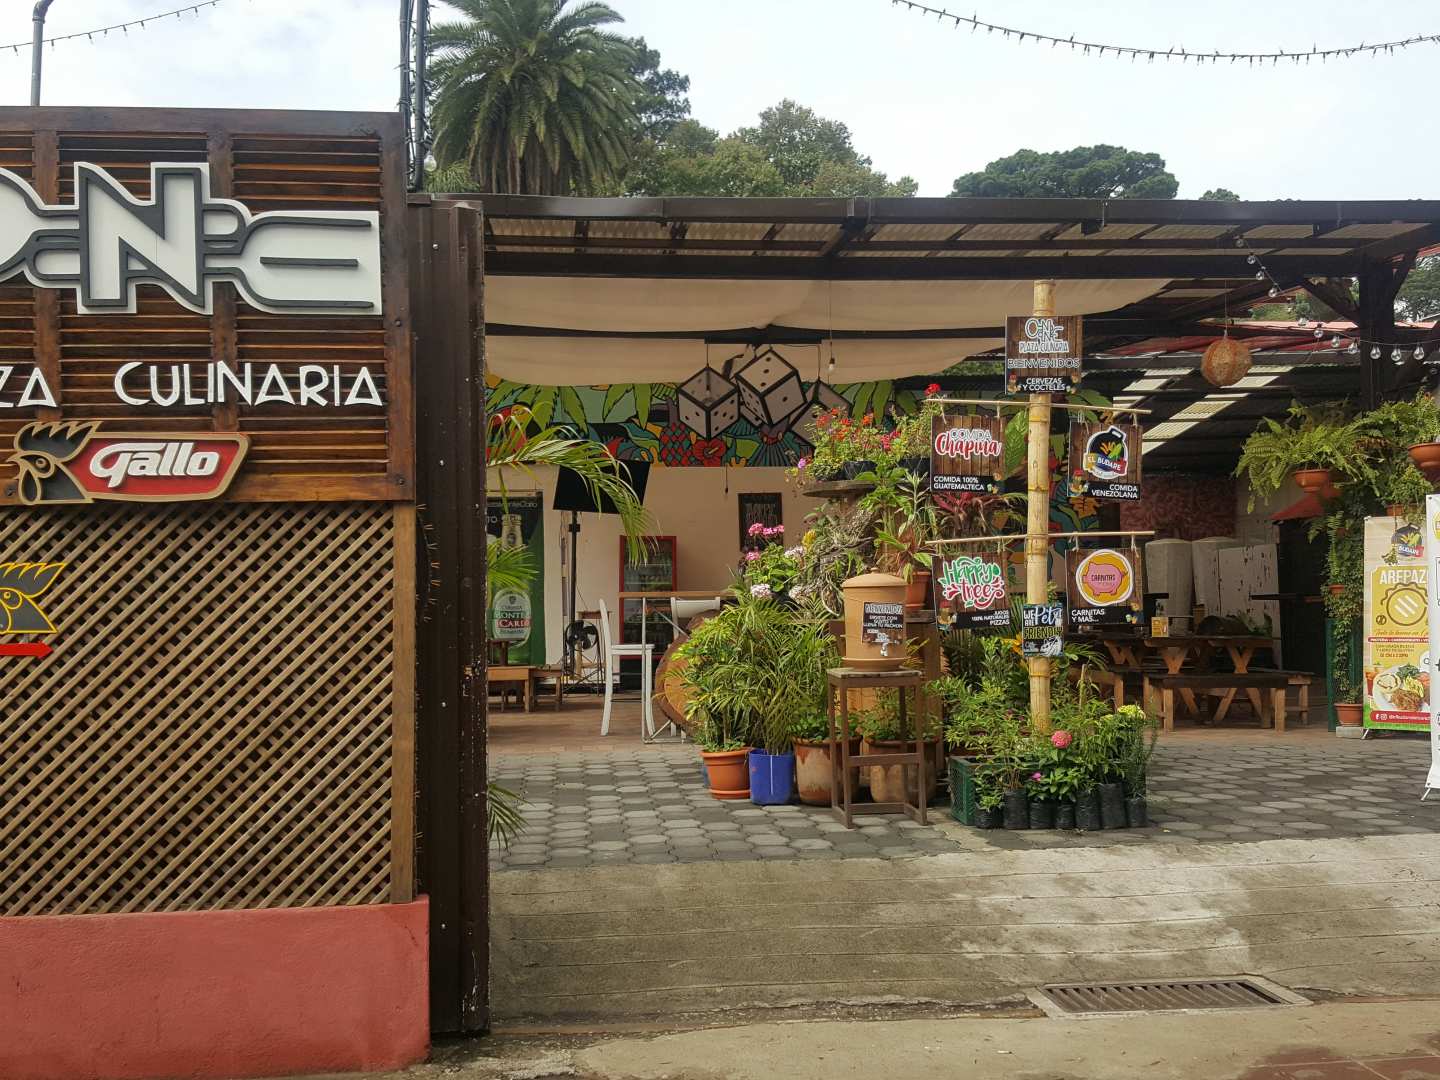 One Plaza Culinaria